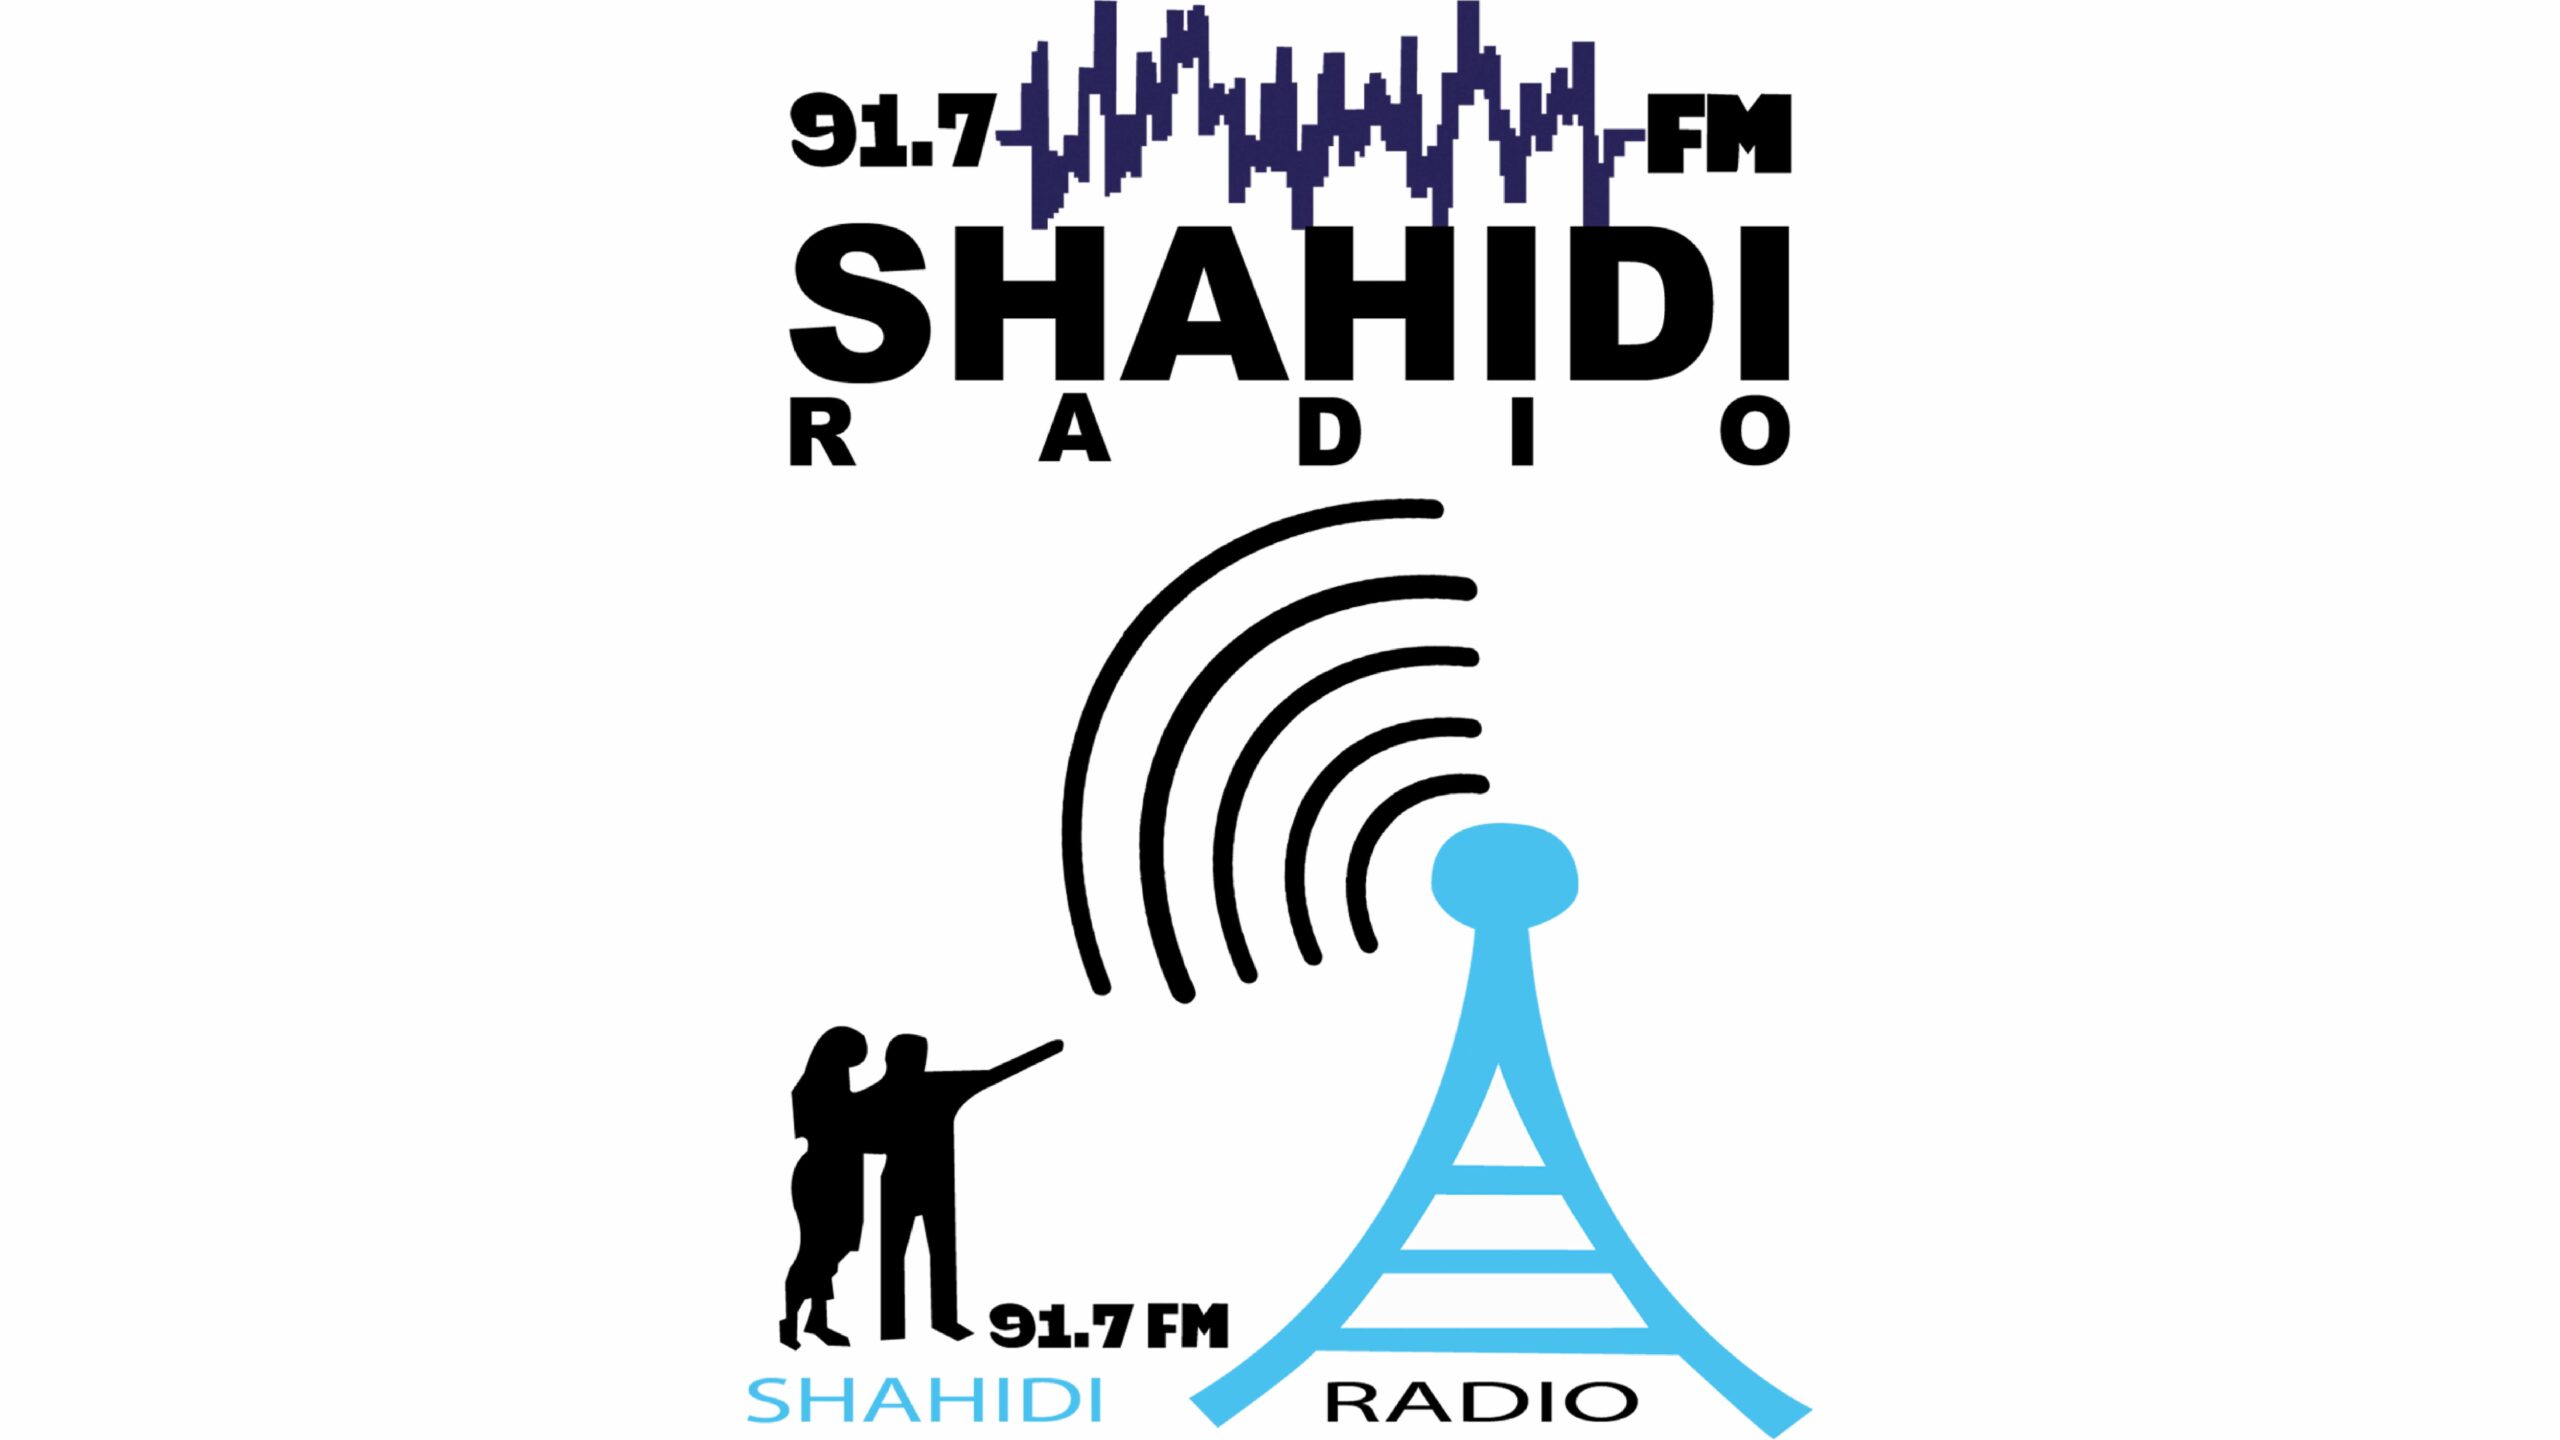 Radio Shaidi Logo For Branding3636 scaled